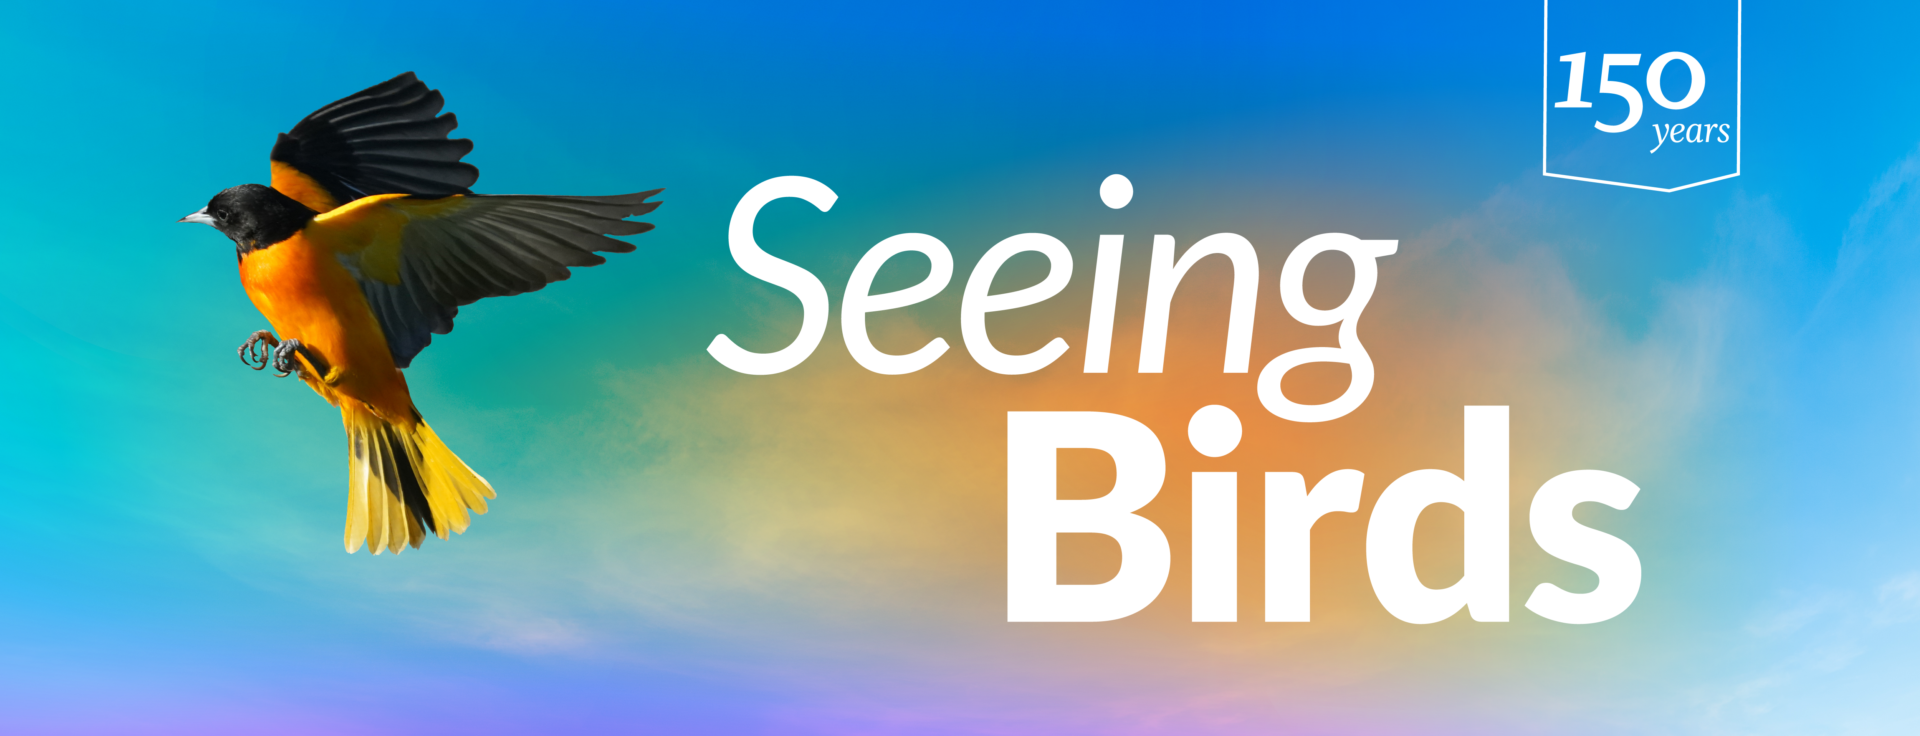 Bird in flight with text: Seeing Birds. 150 years.